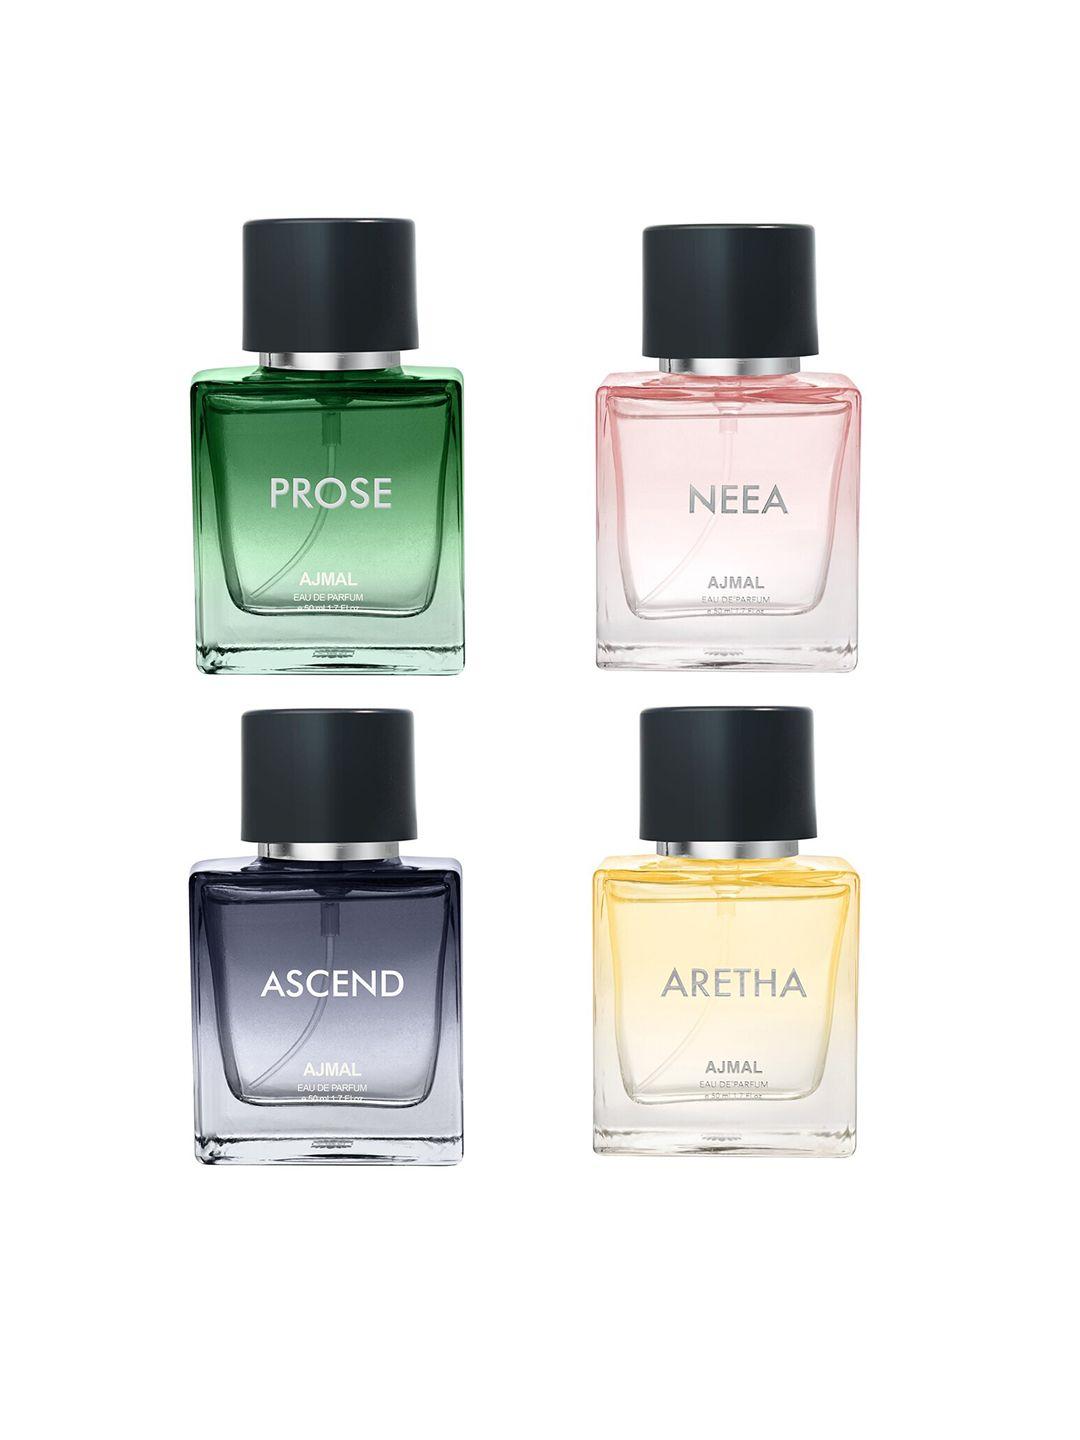 ajmal set of 4 eau de parfums - ascend + prose + aretha + neea - 50ml each